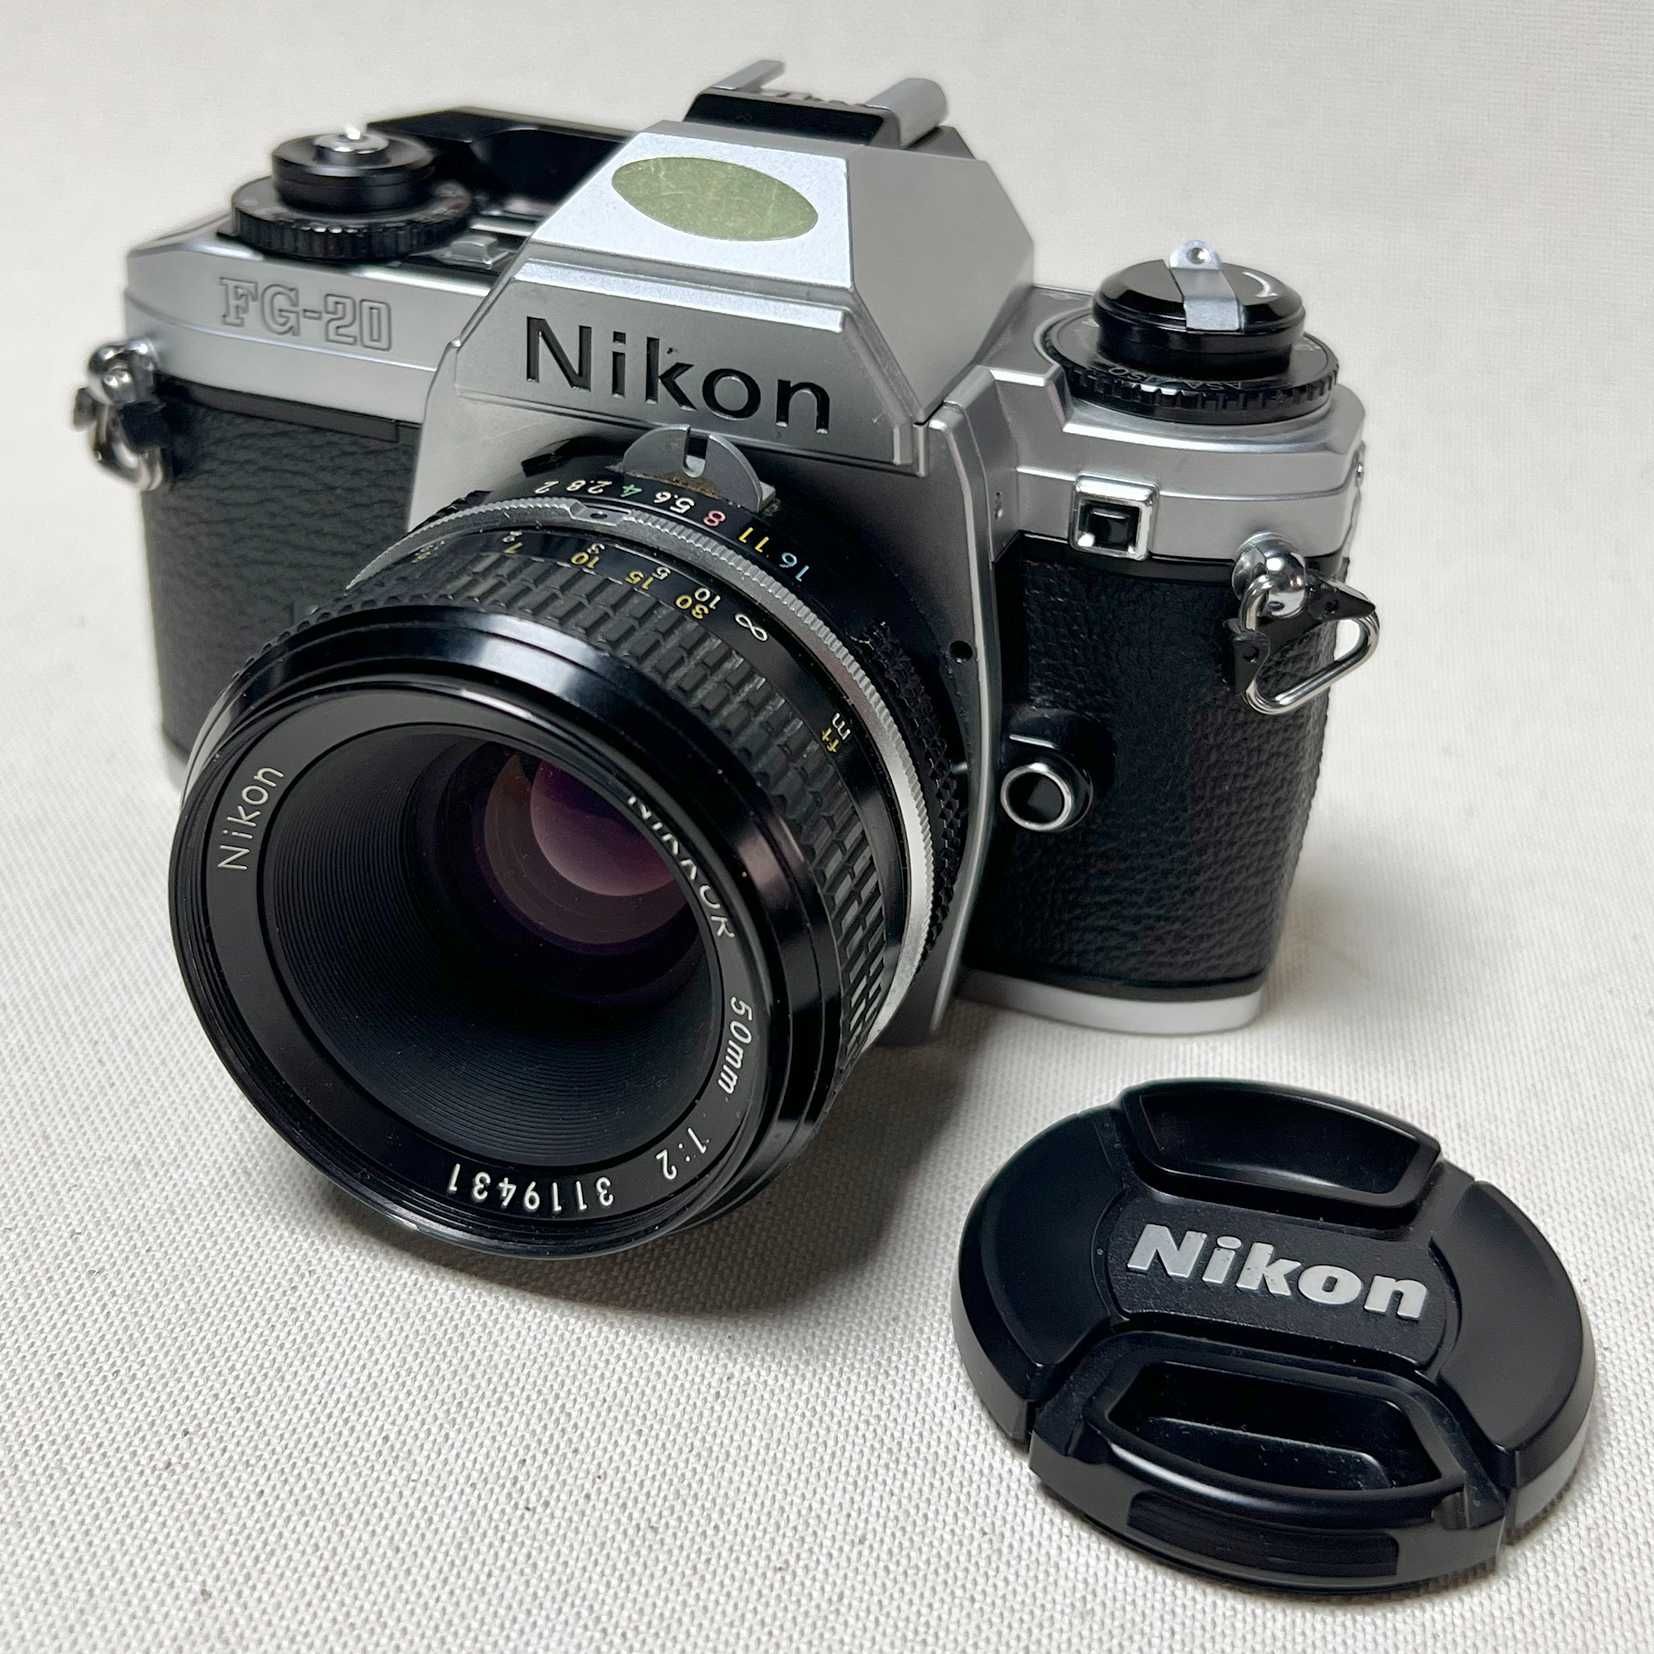 Nikon FG-20 + Nikkor 50mm/2, foto film, colectie